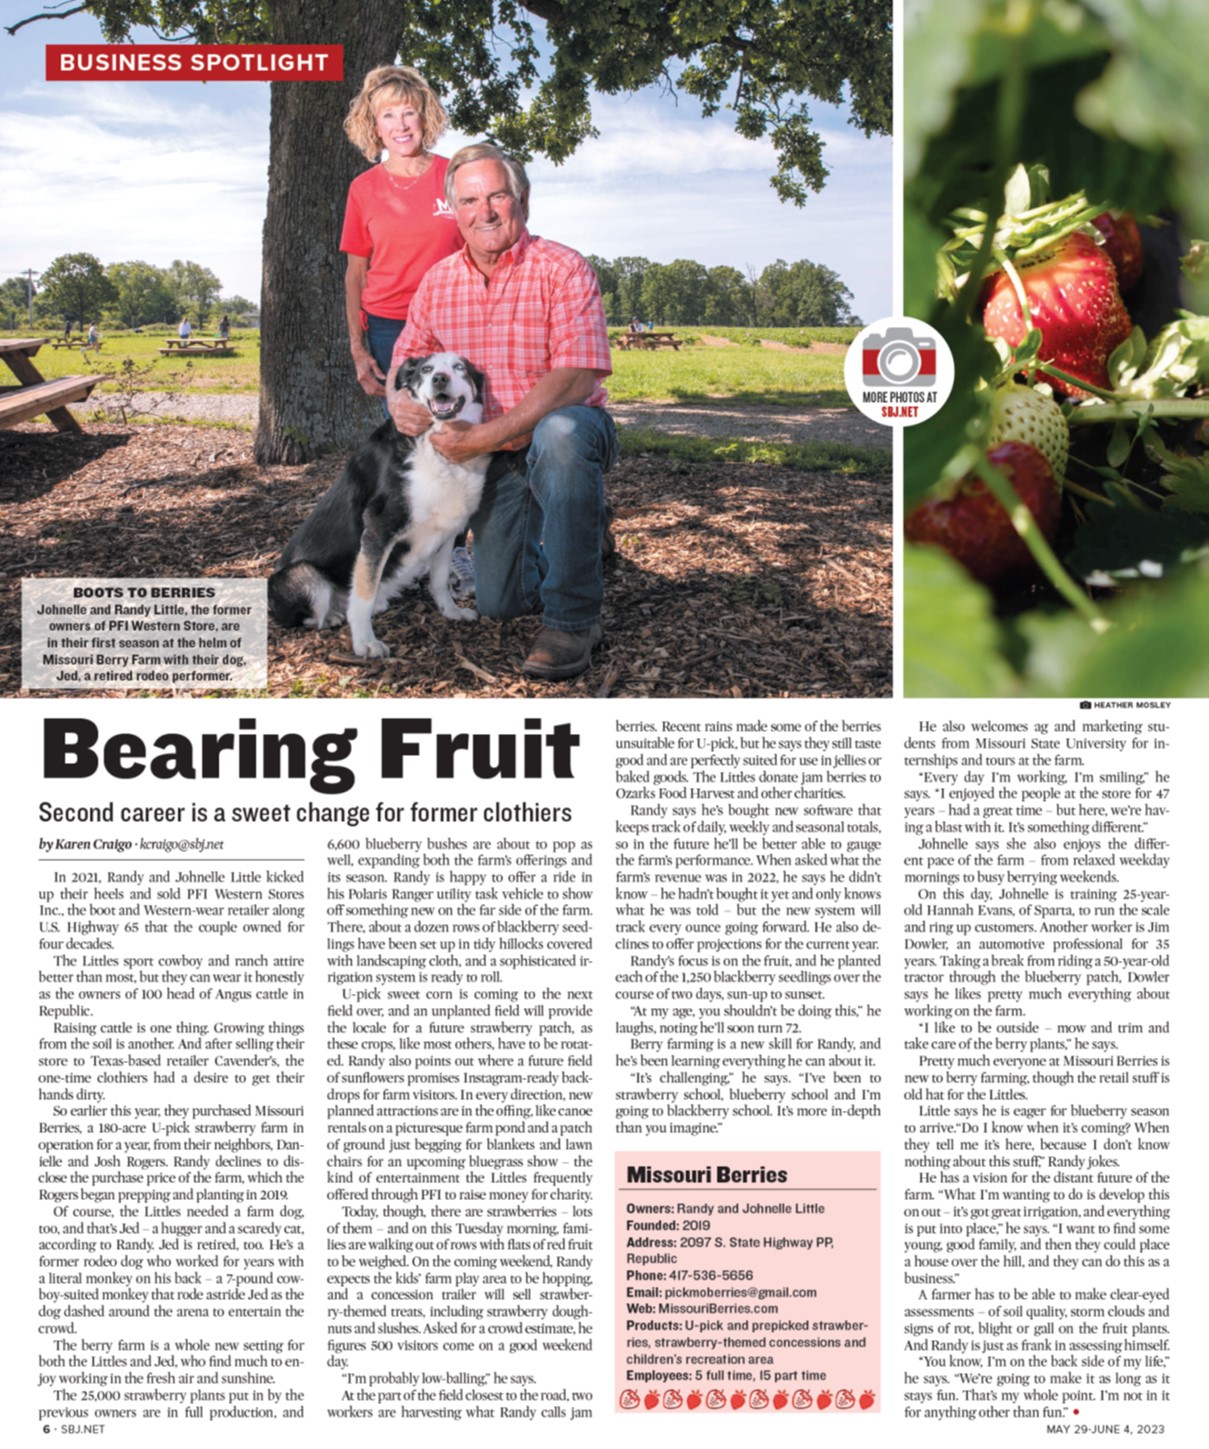 SBJ Feature on Missouri Berries - Blueberry Farm in Republic Missouri